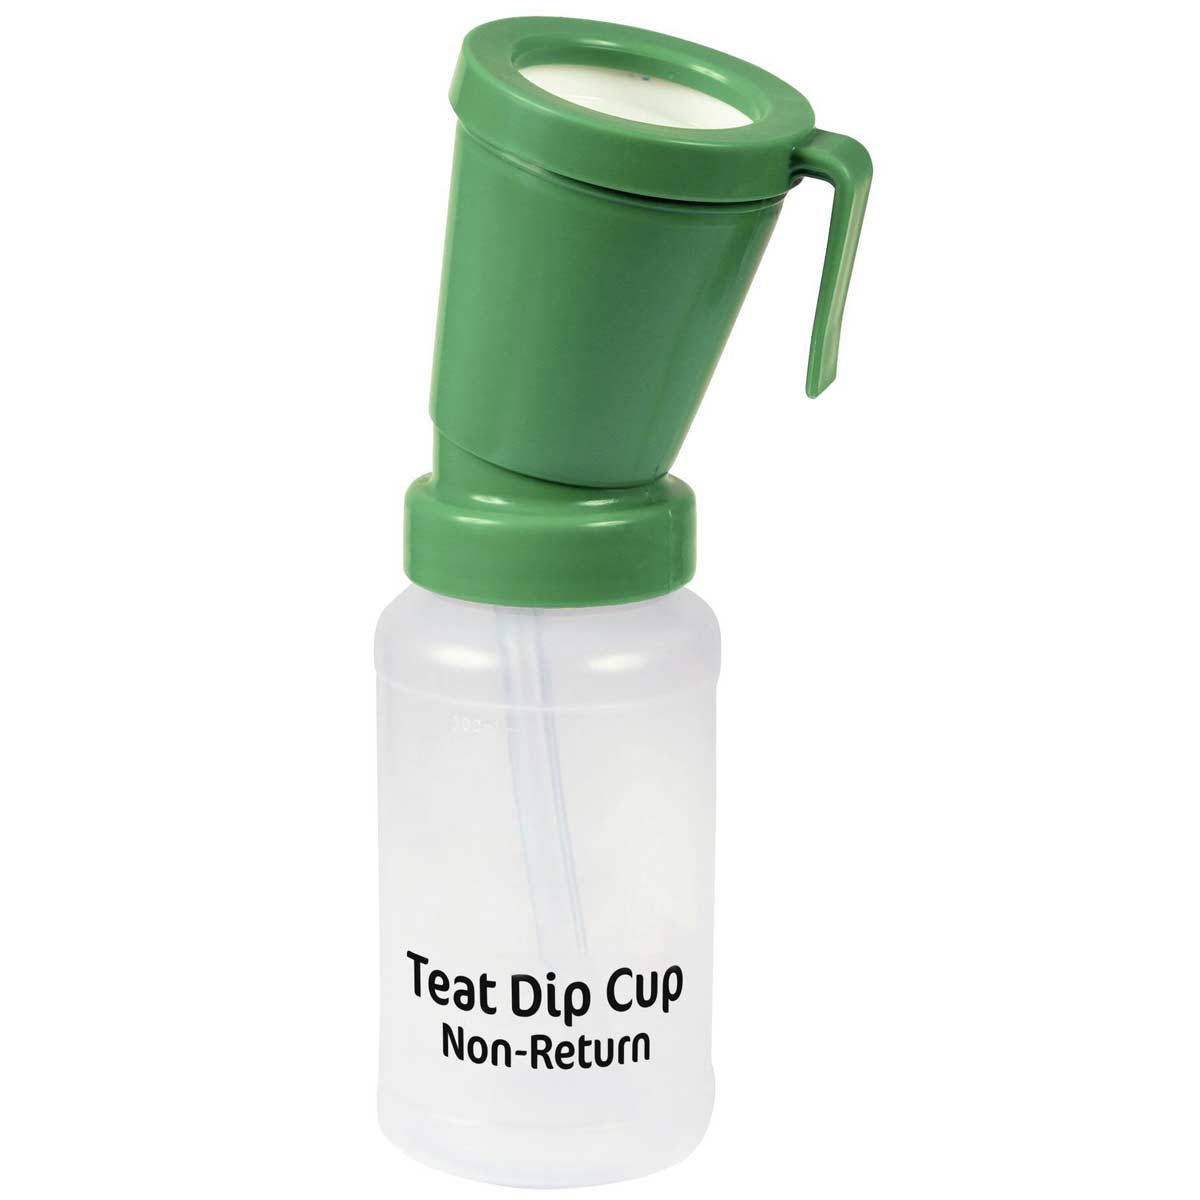 Dip cup Non-Return green reservoir 300 ml